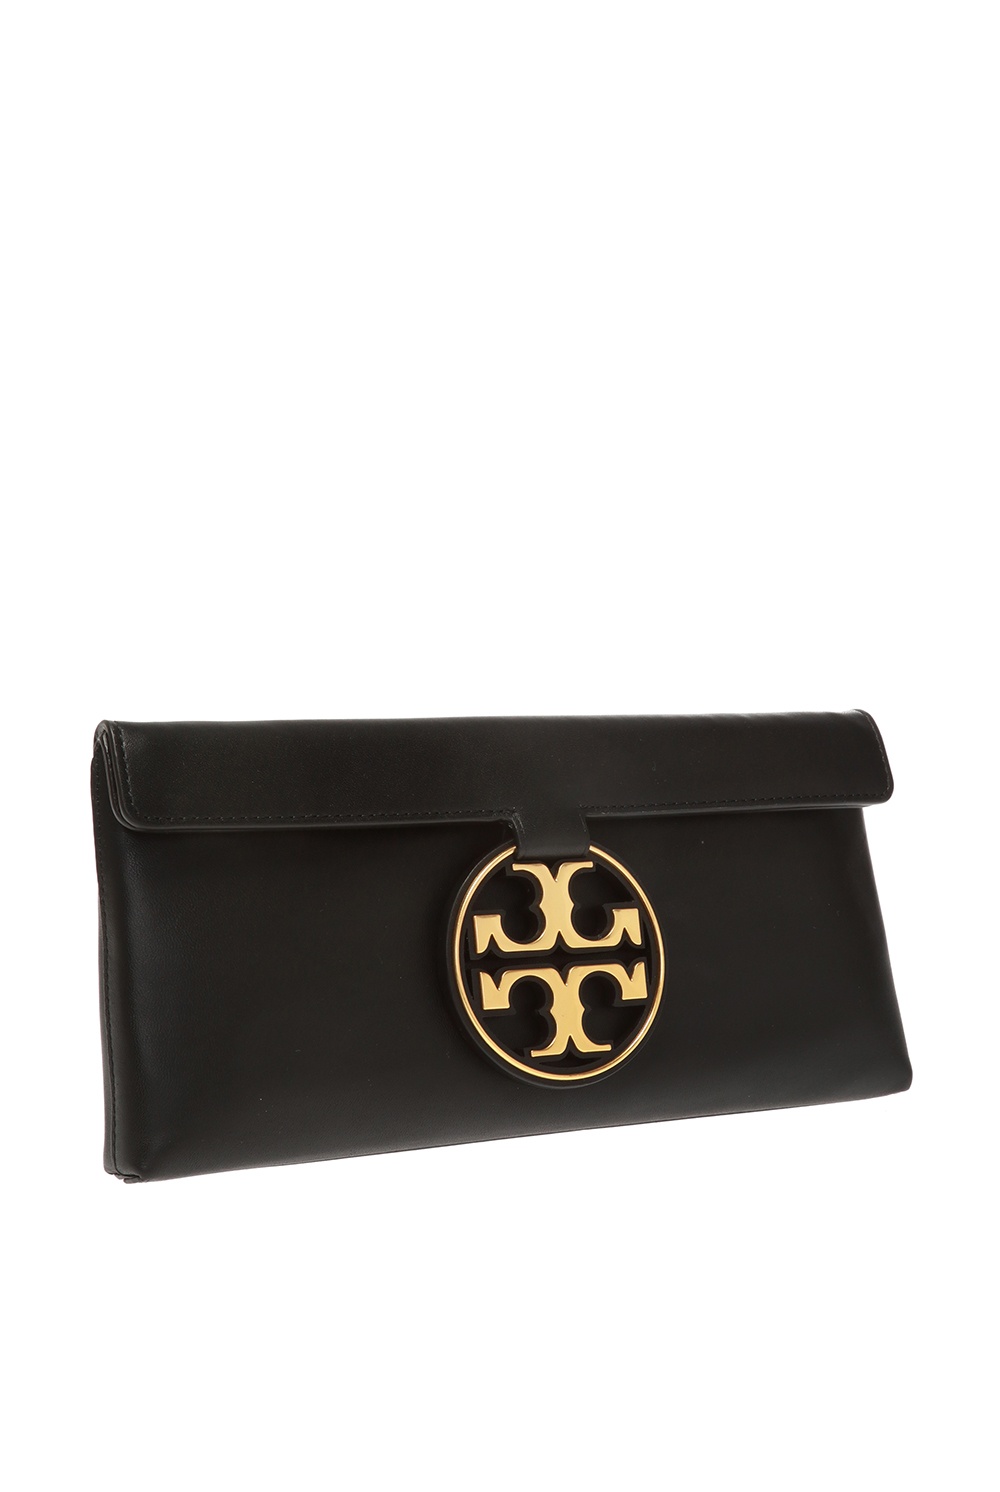 Tory Burch Leather clutch with logo | Women's Bags | Vitkac